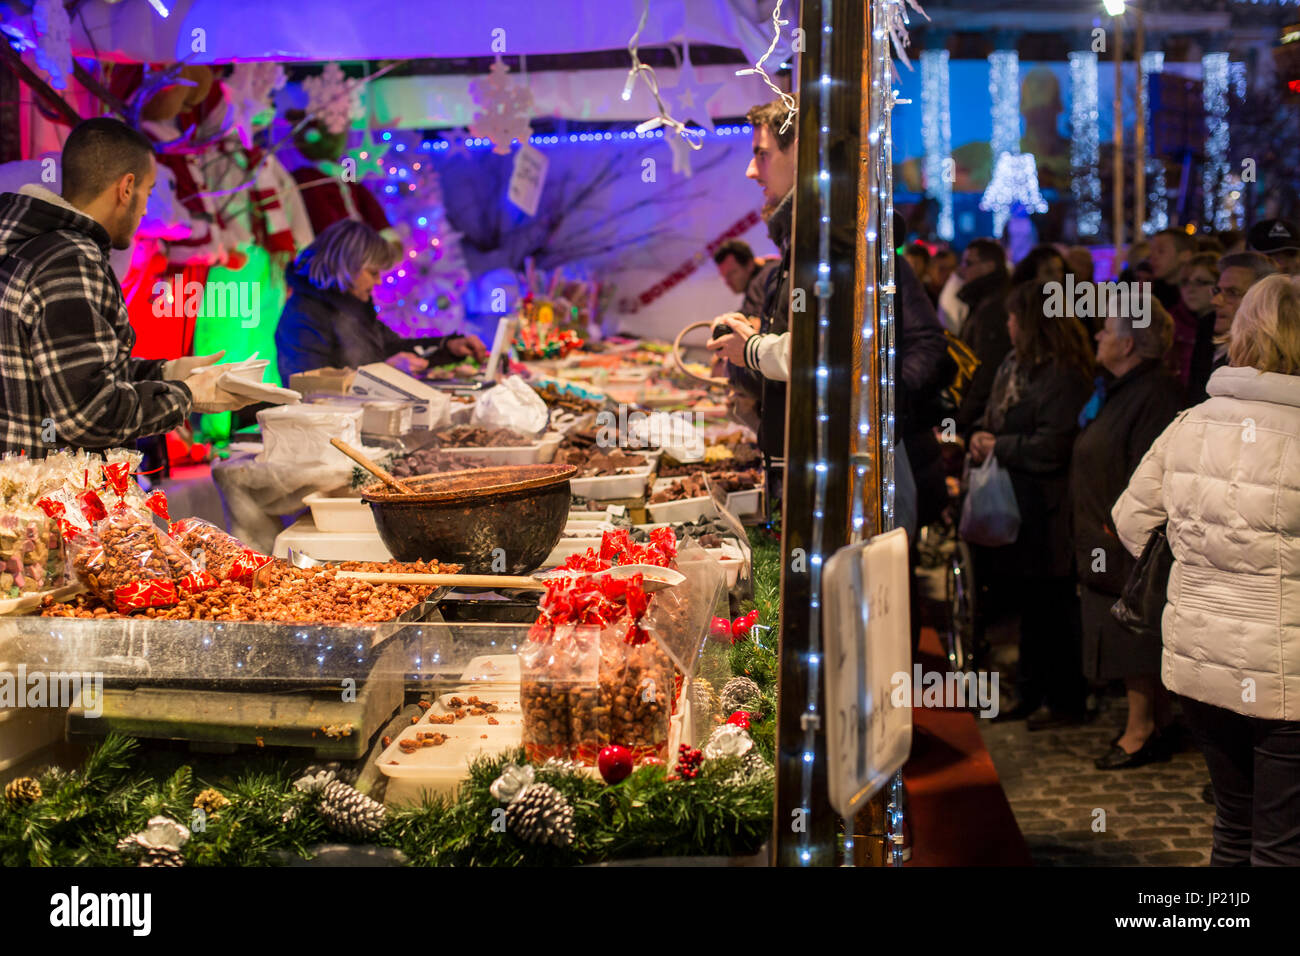 Brussels, Belgium - December 8, 2013: Christmas market food stall at Winter Wonder in Brussels, Belgium Stock Photo